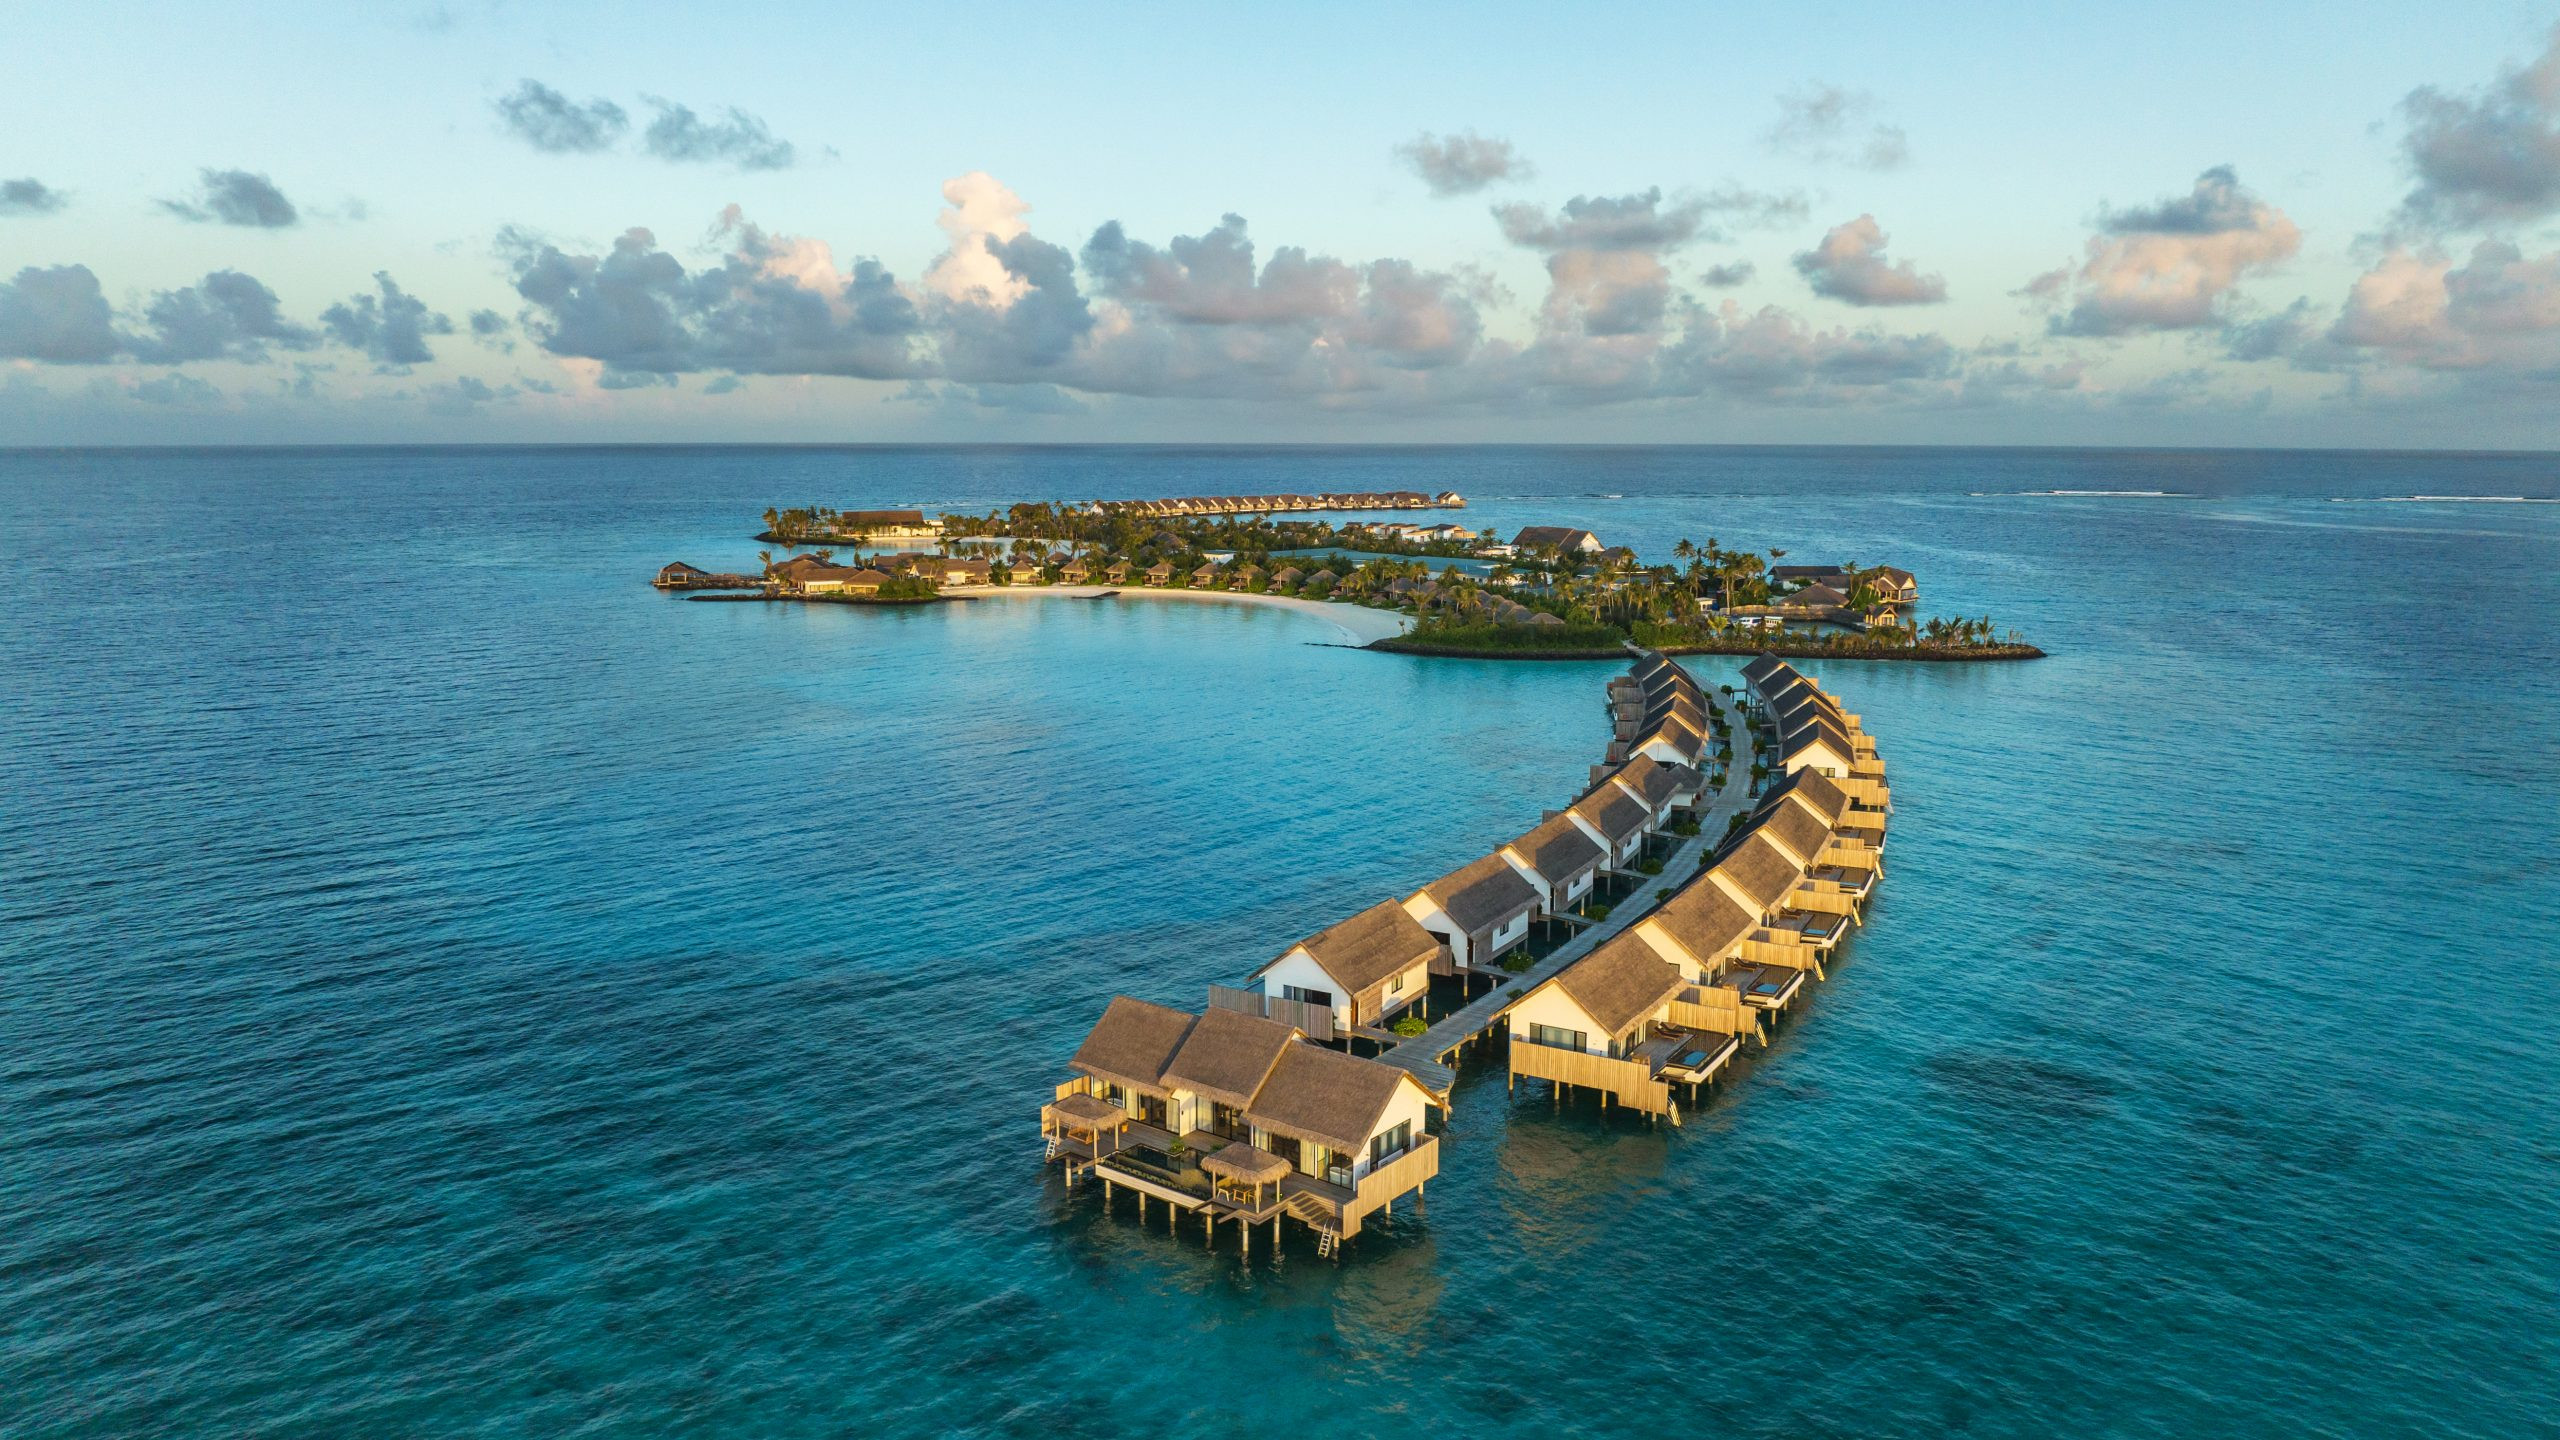 Hilton Maldives Amingiri Resort & Spa Welcomes Couples for a Dreamy Valentine's